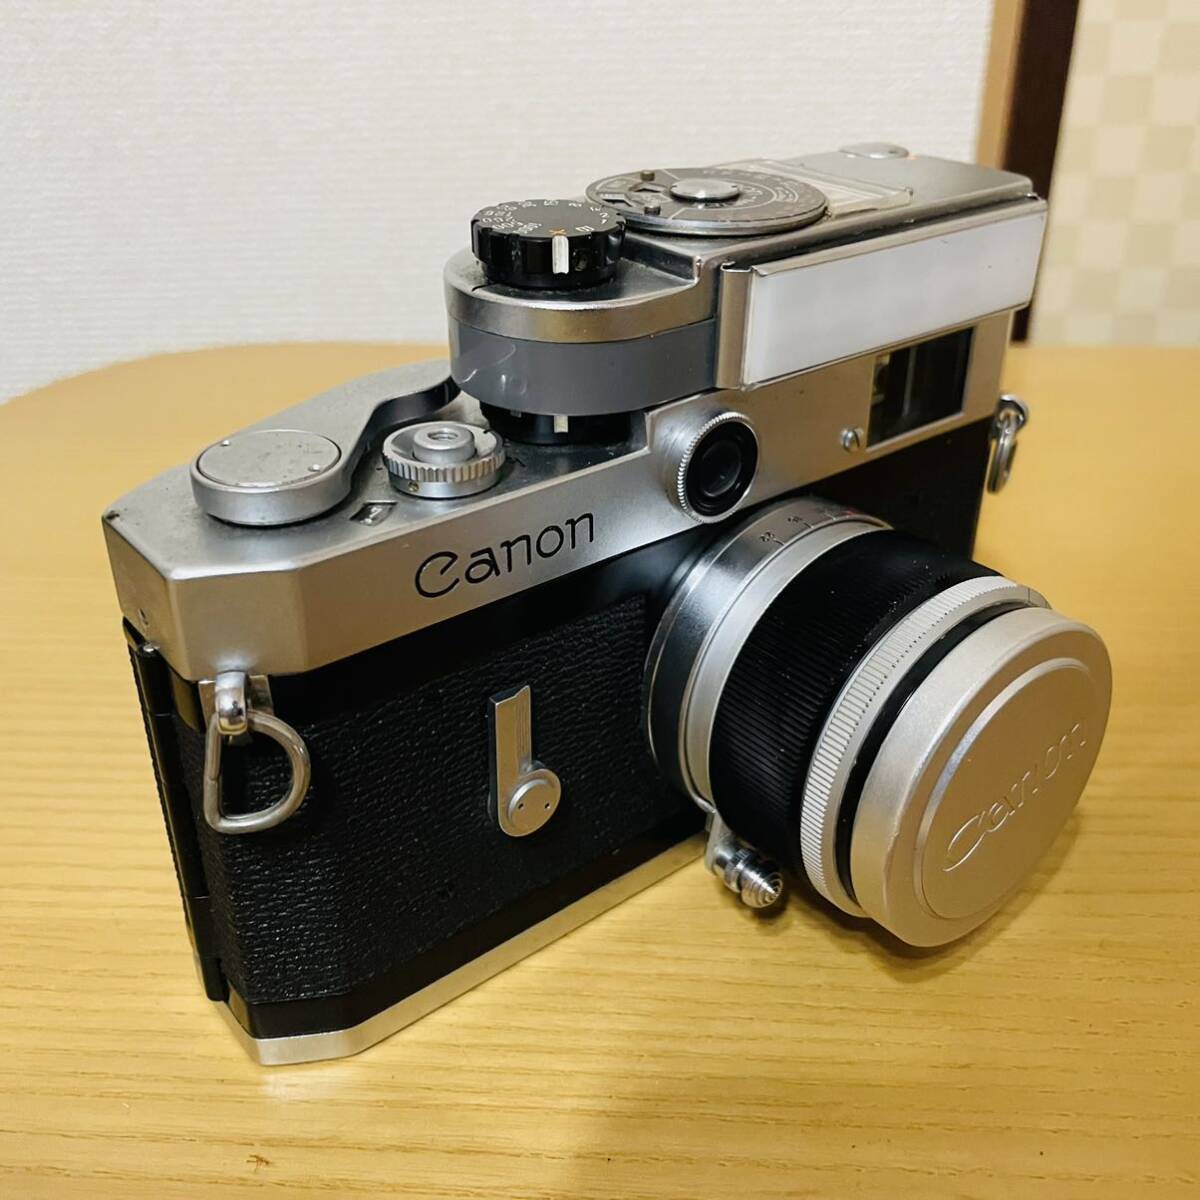 Canon Ppyu rail 50mm Leica L mount lens Canon range finder film camera 